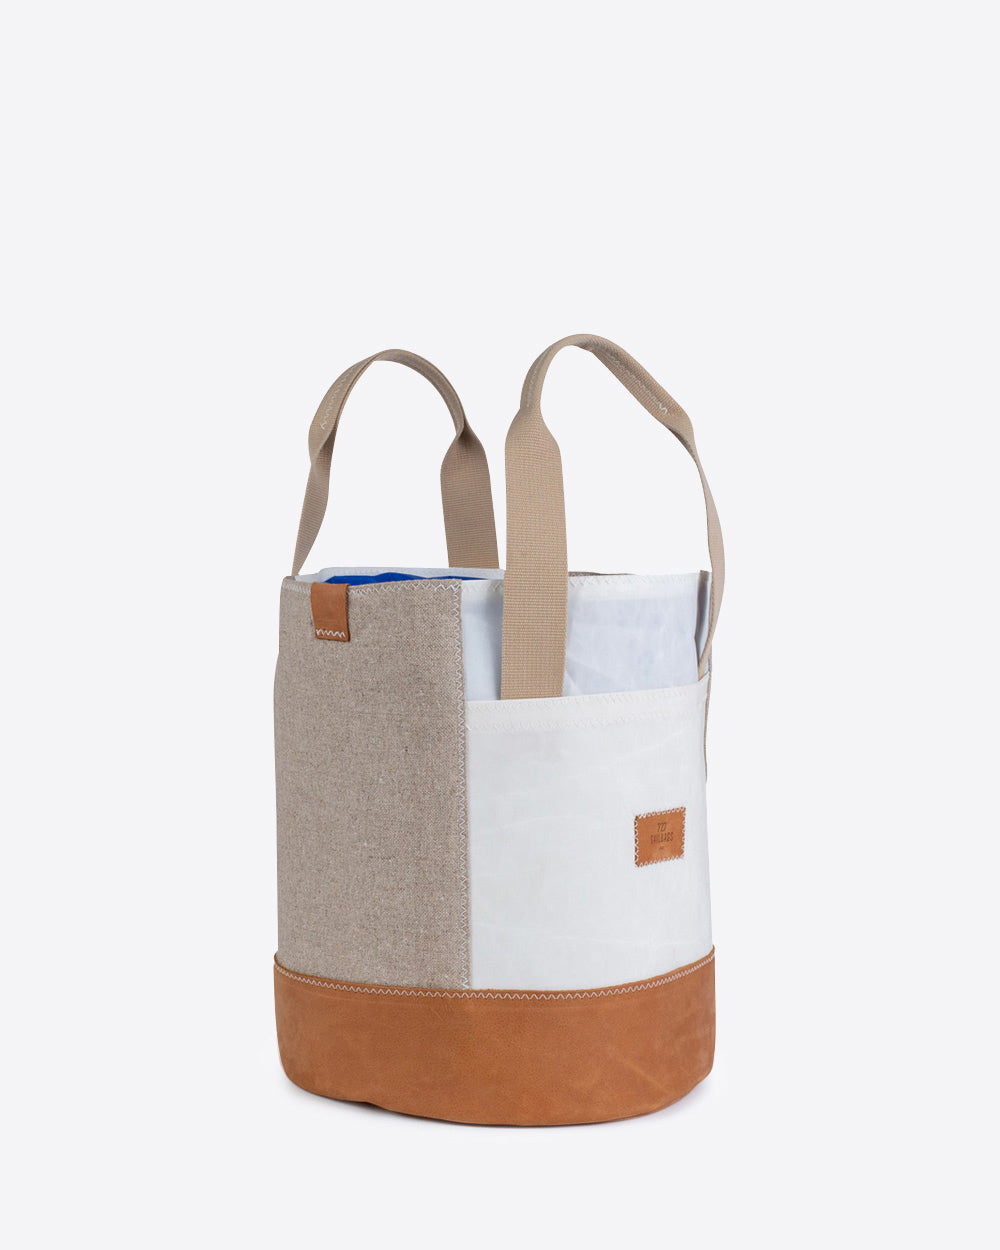 Damen Handtasche "Bucket Bag" by 727 Sailbags / Segeltuch weiß / Leinen / Boden leder